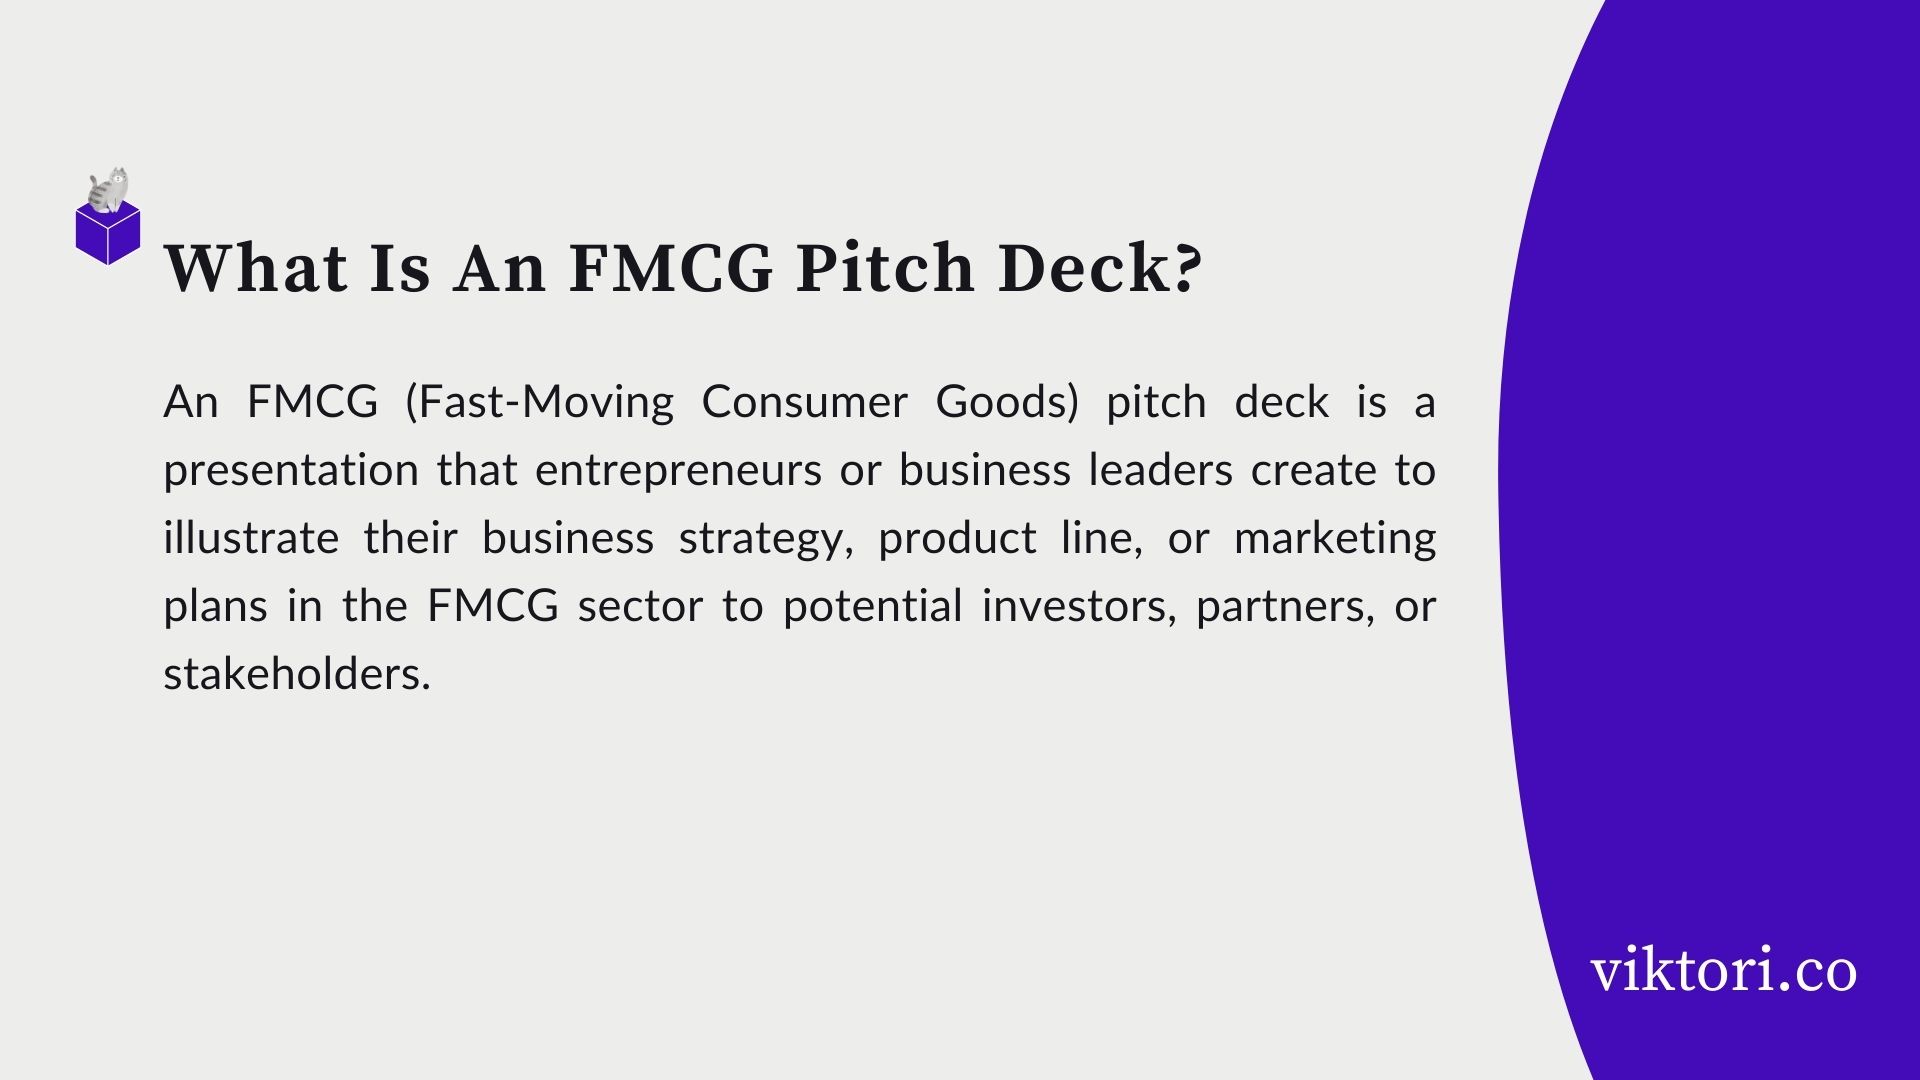 fmcg pitch deck definition